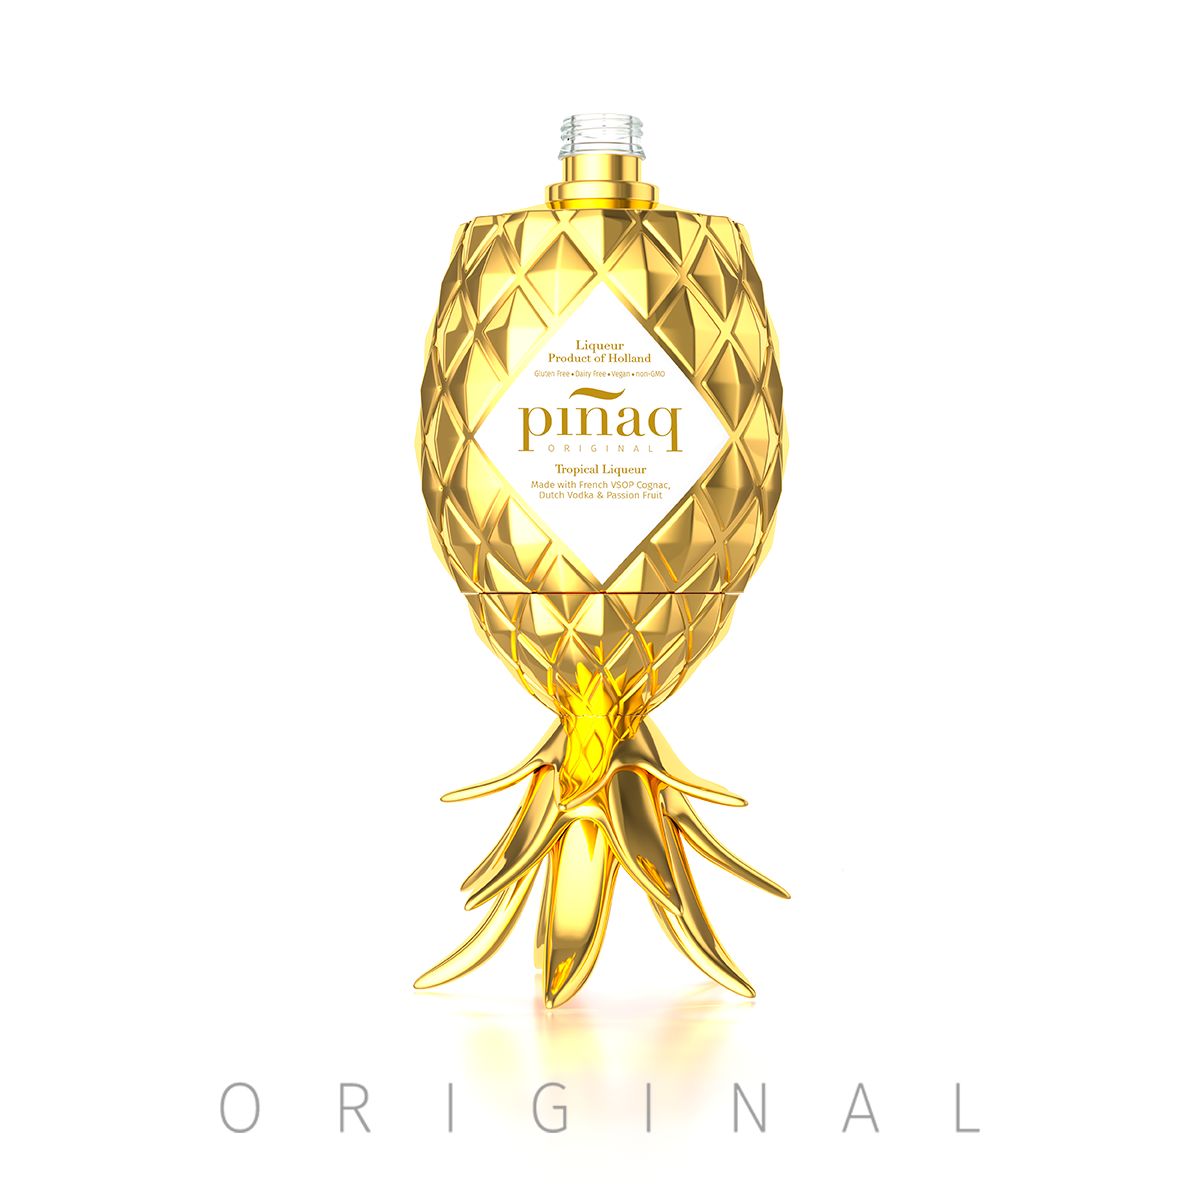 Piñaq Original Tropical Liqueur 17º 100cl菠萝可乐达鸡尾酒图